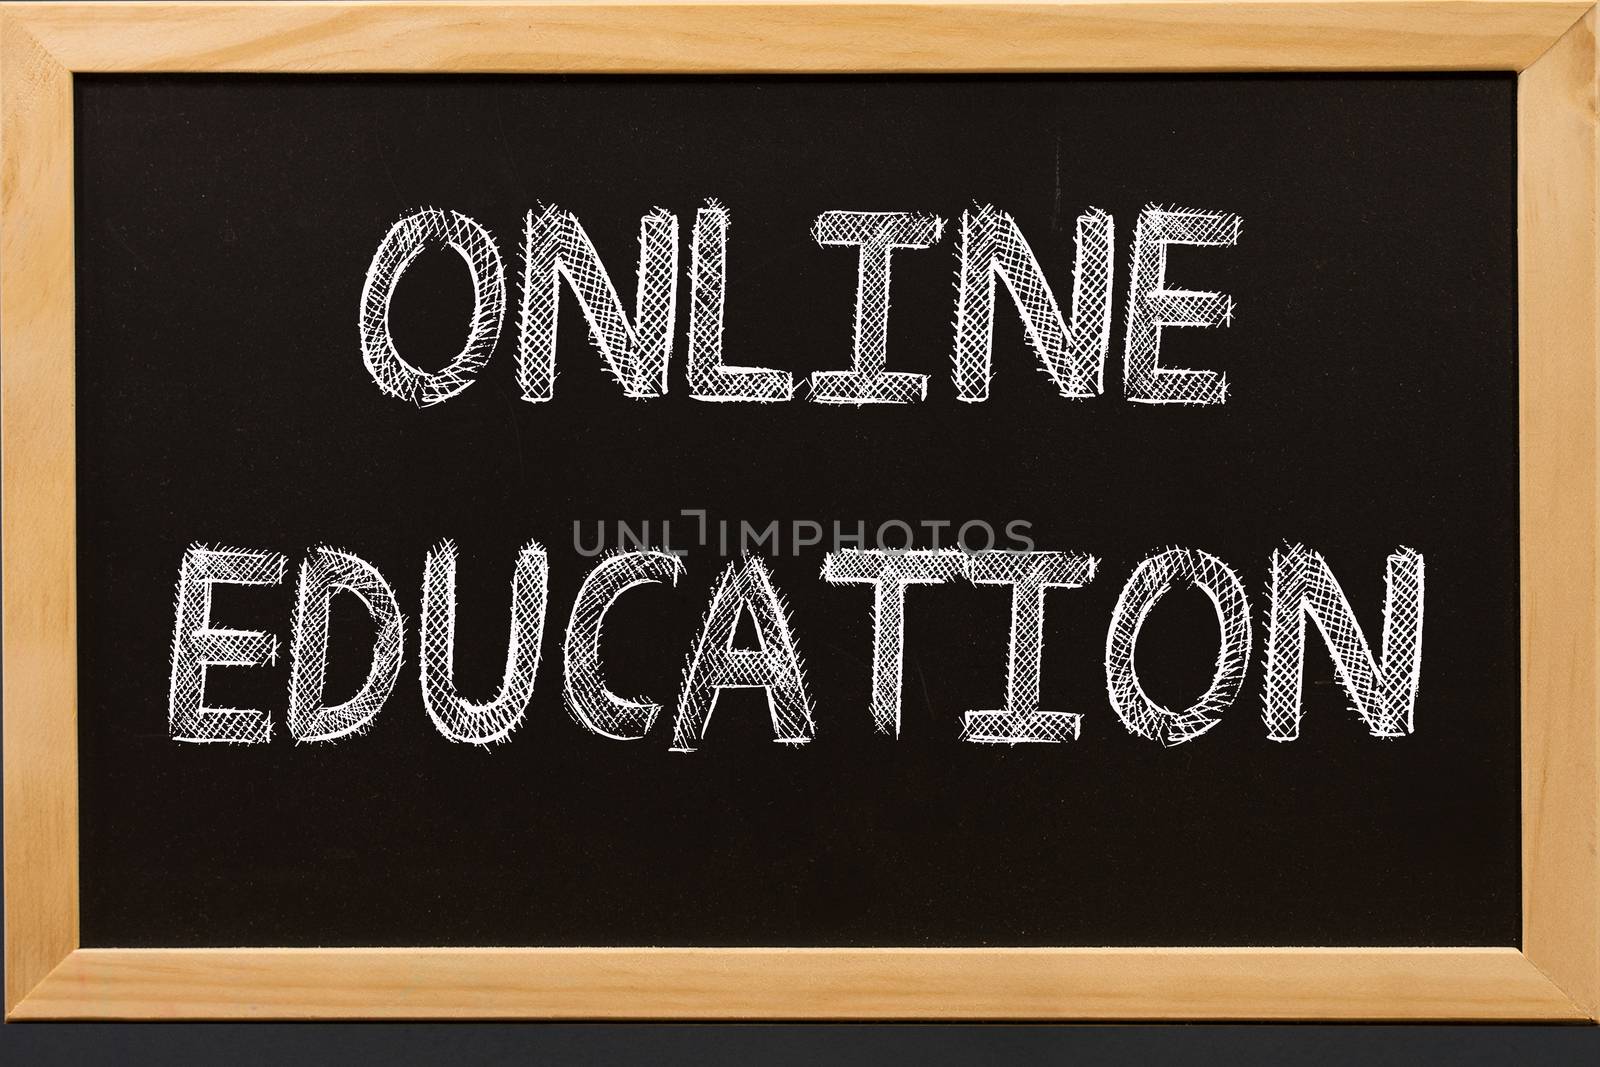 Concept Education online.  Education online text on black backgr by Buttus_casso